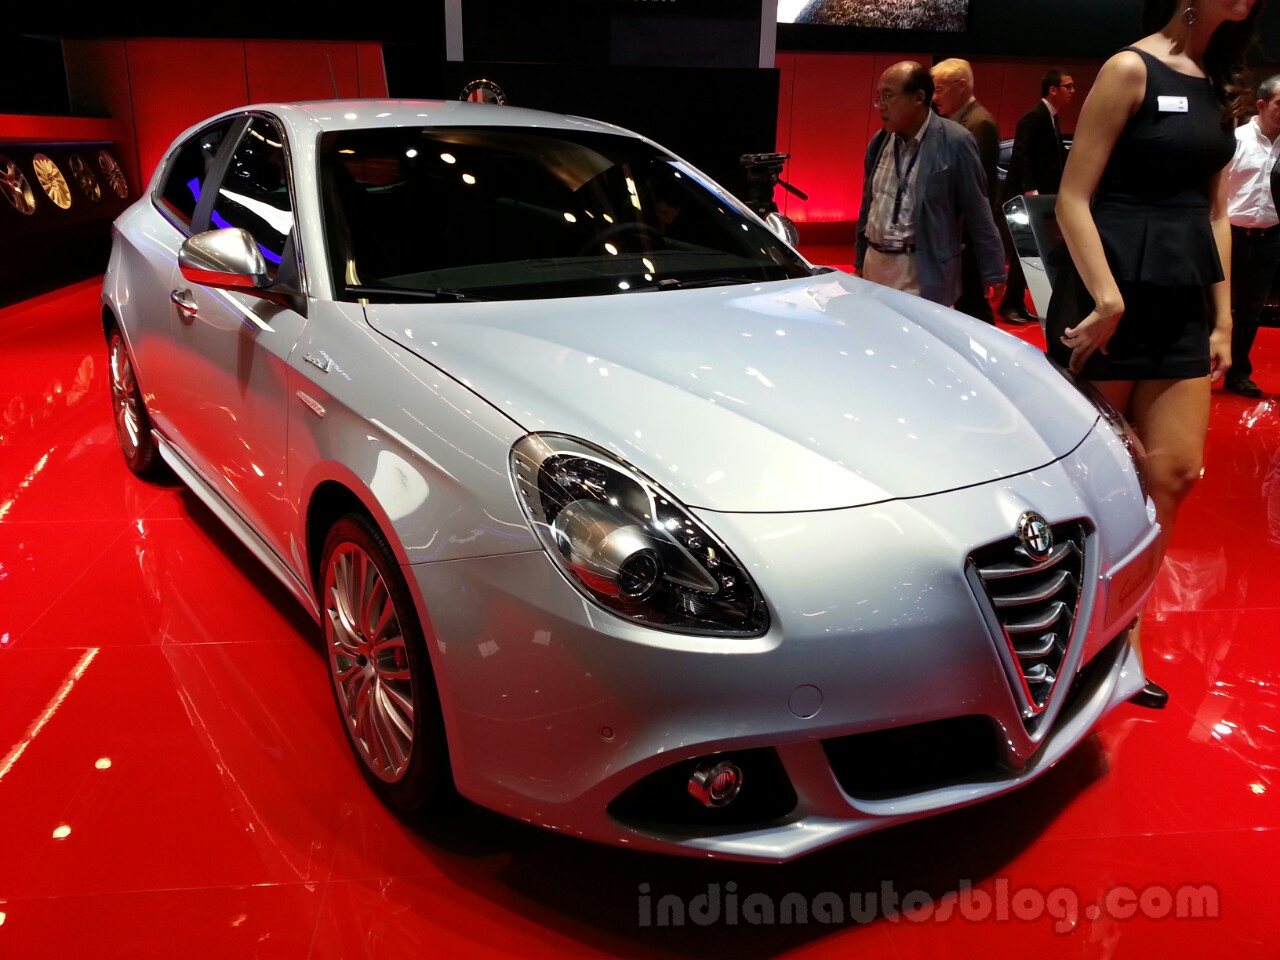 https://img.indianautosblog.com/2013/09/Alfa-Romeo-Giulietta-front-quarter.jpg